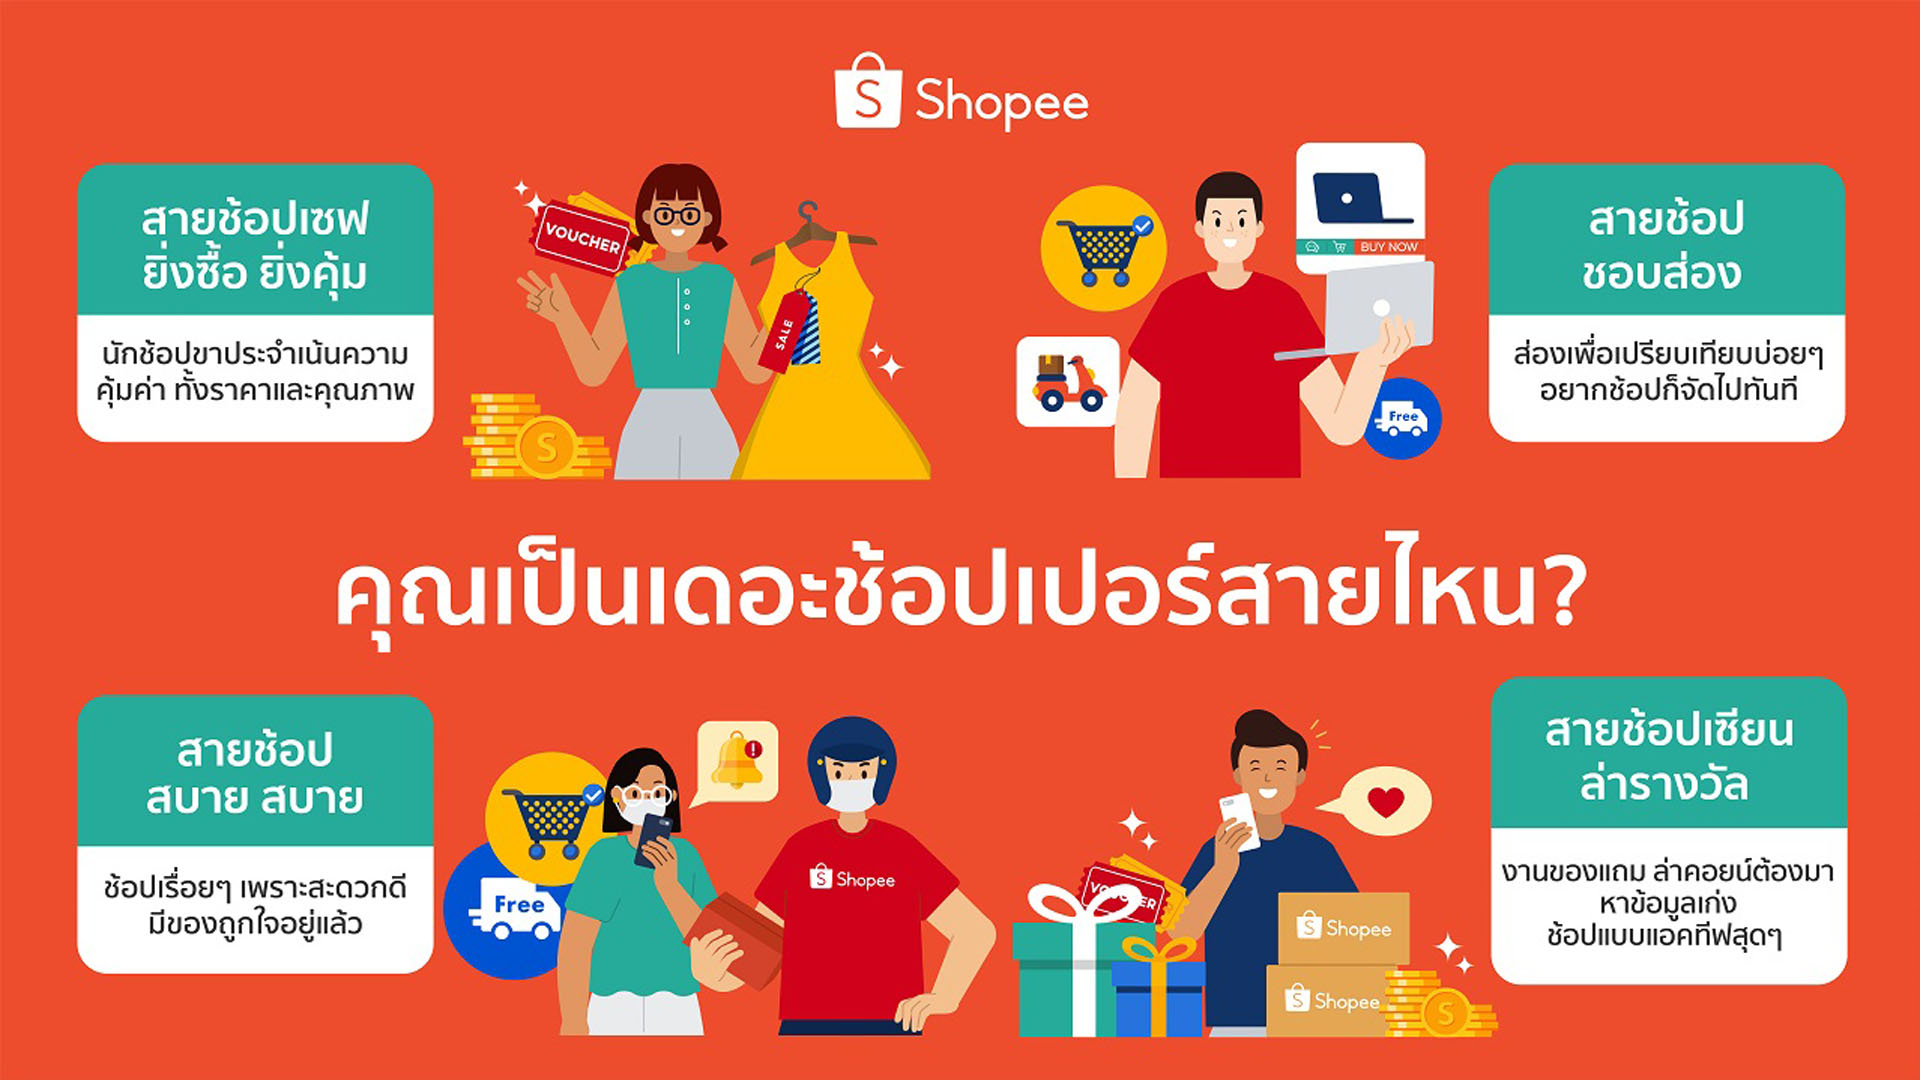 Shopee เผยเทรนด์นักช็อปออนไลน์ พบ 1 ใน 4 ของคนไทยเป็นนักช็อป “สายช็อปเซฟ ยิ่งซื้อ ยิ่งคุ้ม”